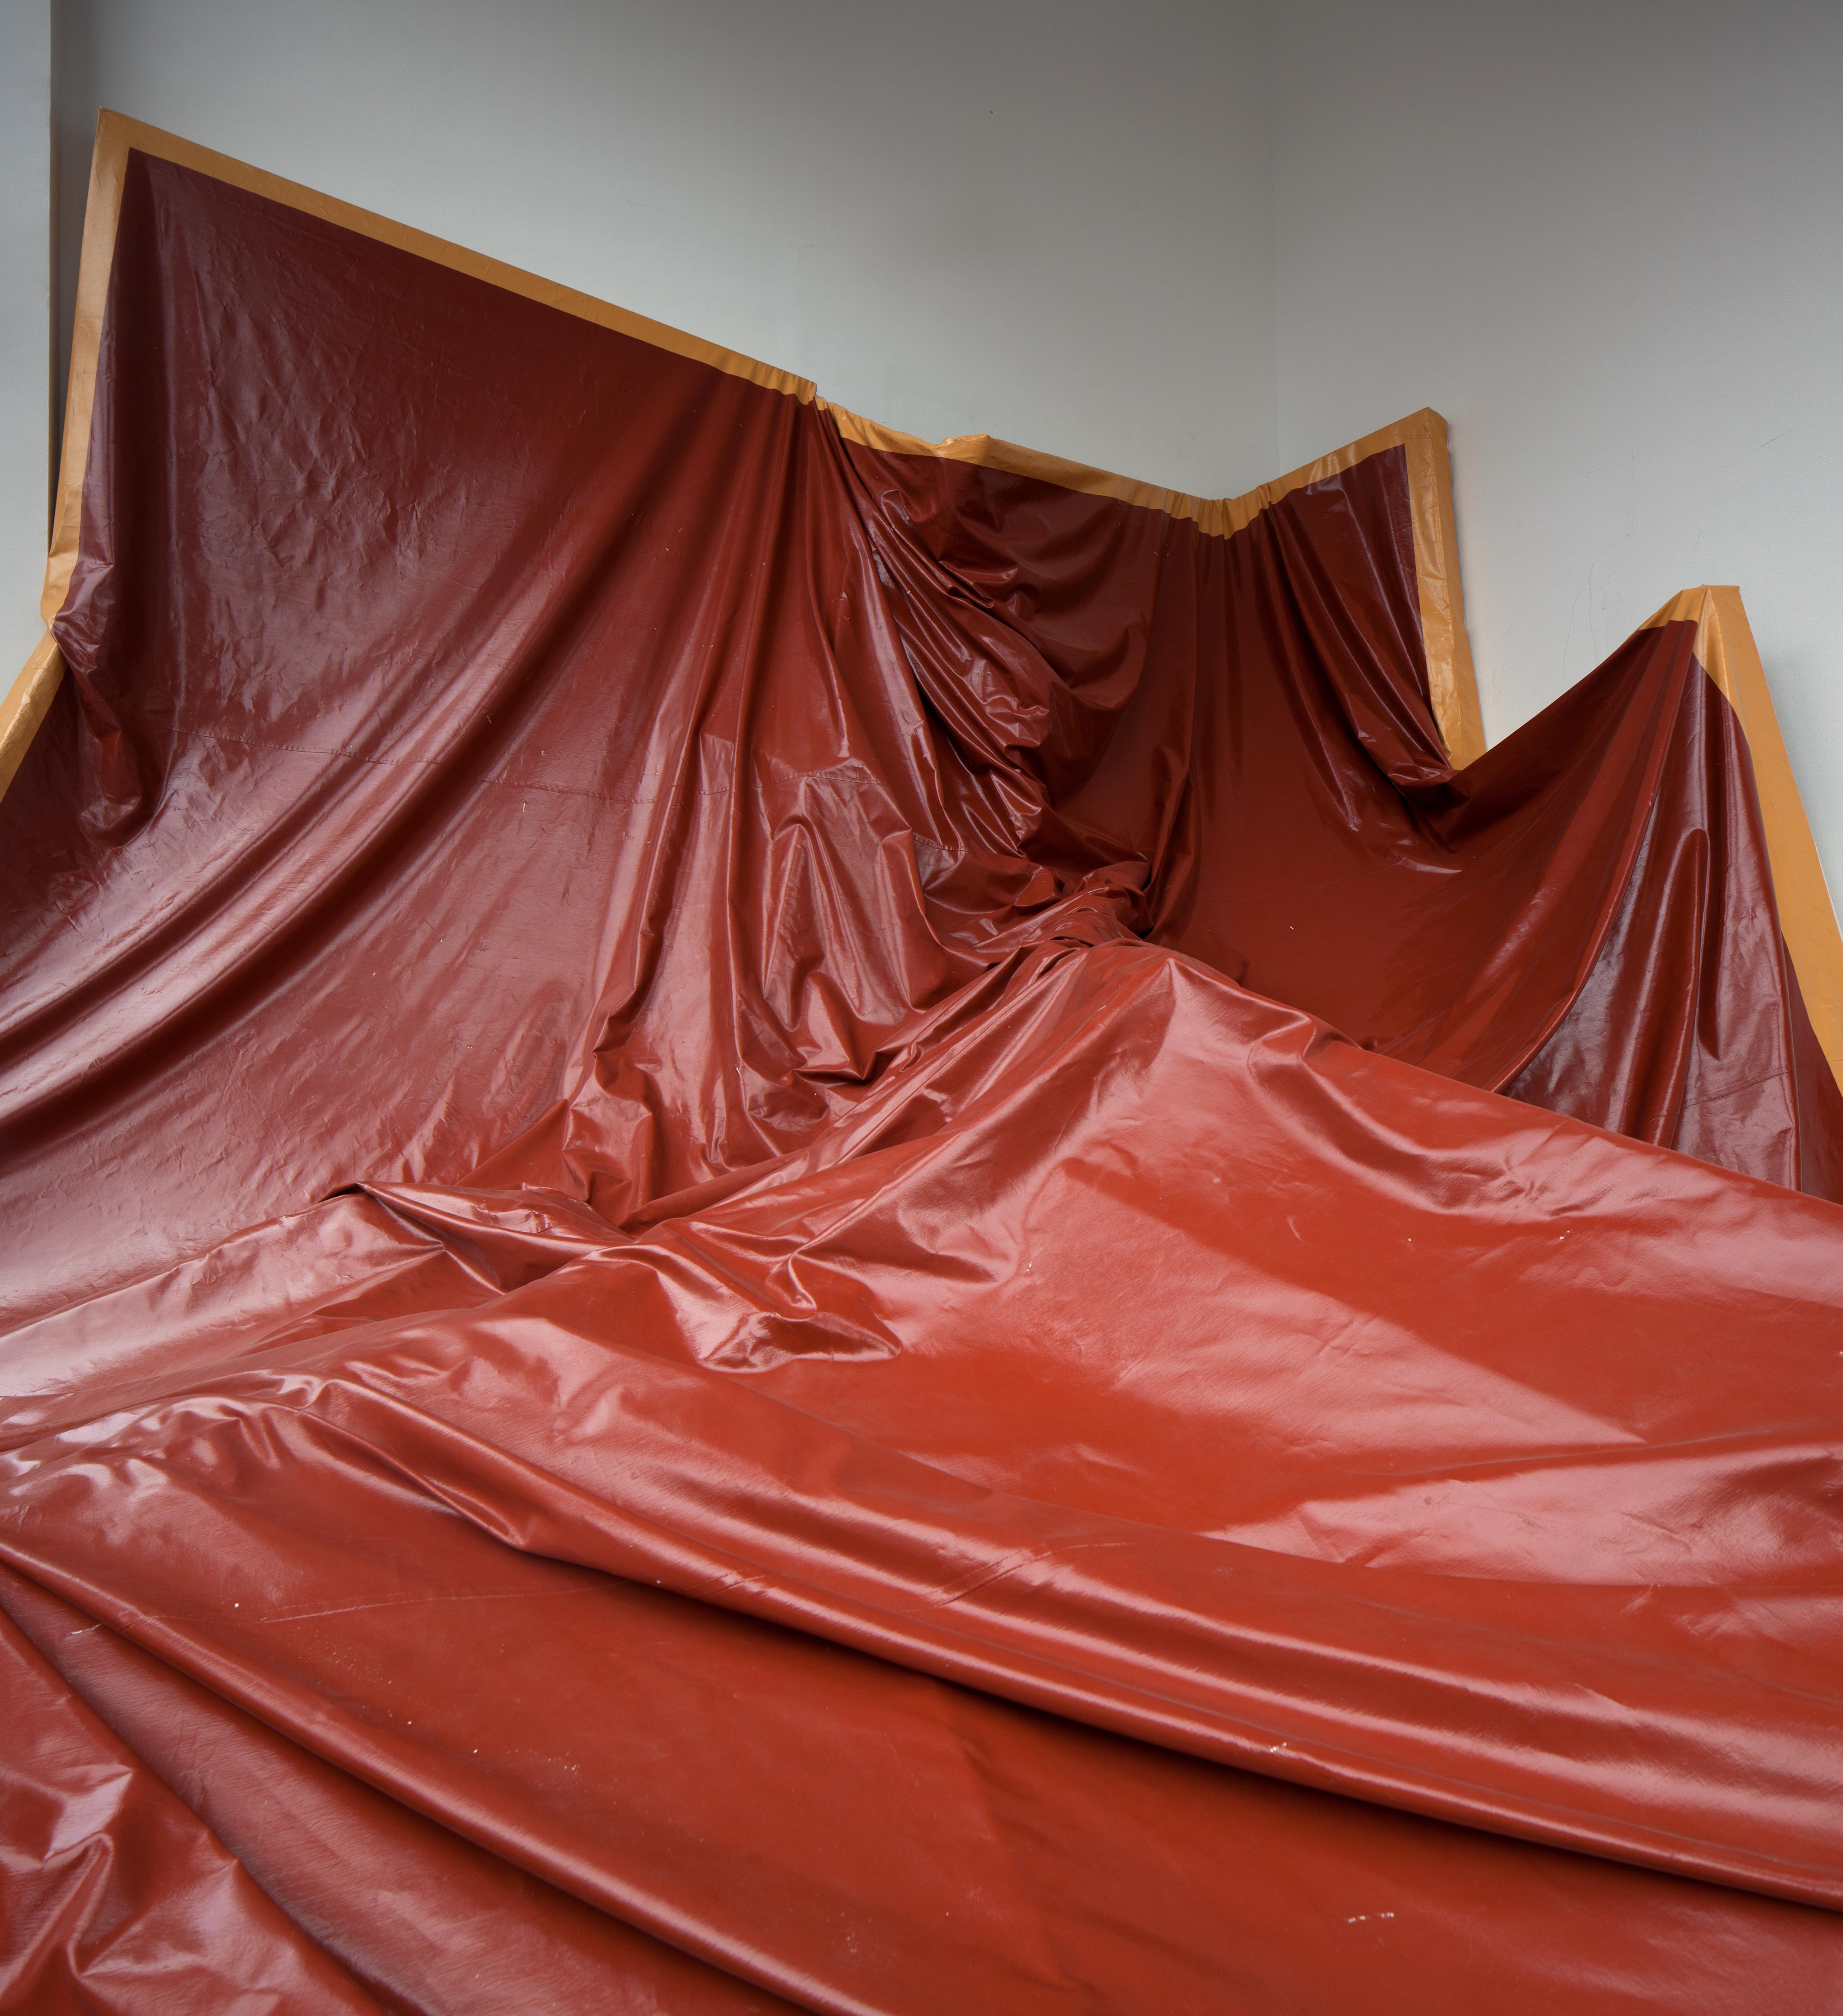 Angela de la Cruz, Larger Than Life (Knackered), 2004-2015. Installation at Galerie Thomas Schulte, Berlin, 2015. Courtesy Angela de la Cruz and Galerie Thomas Schulte